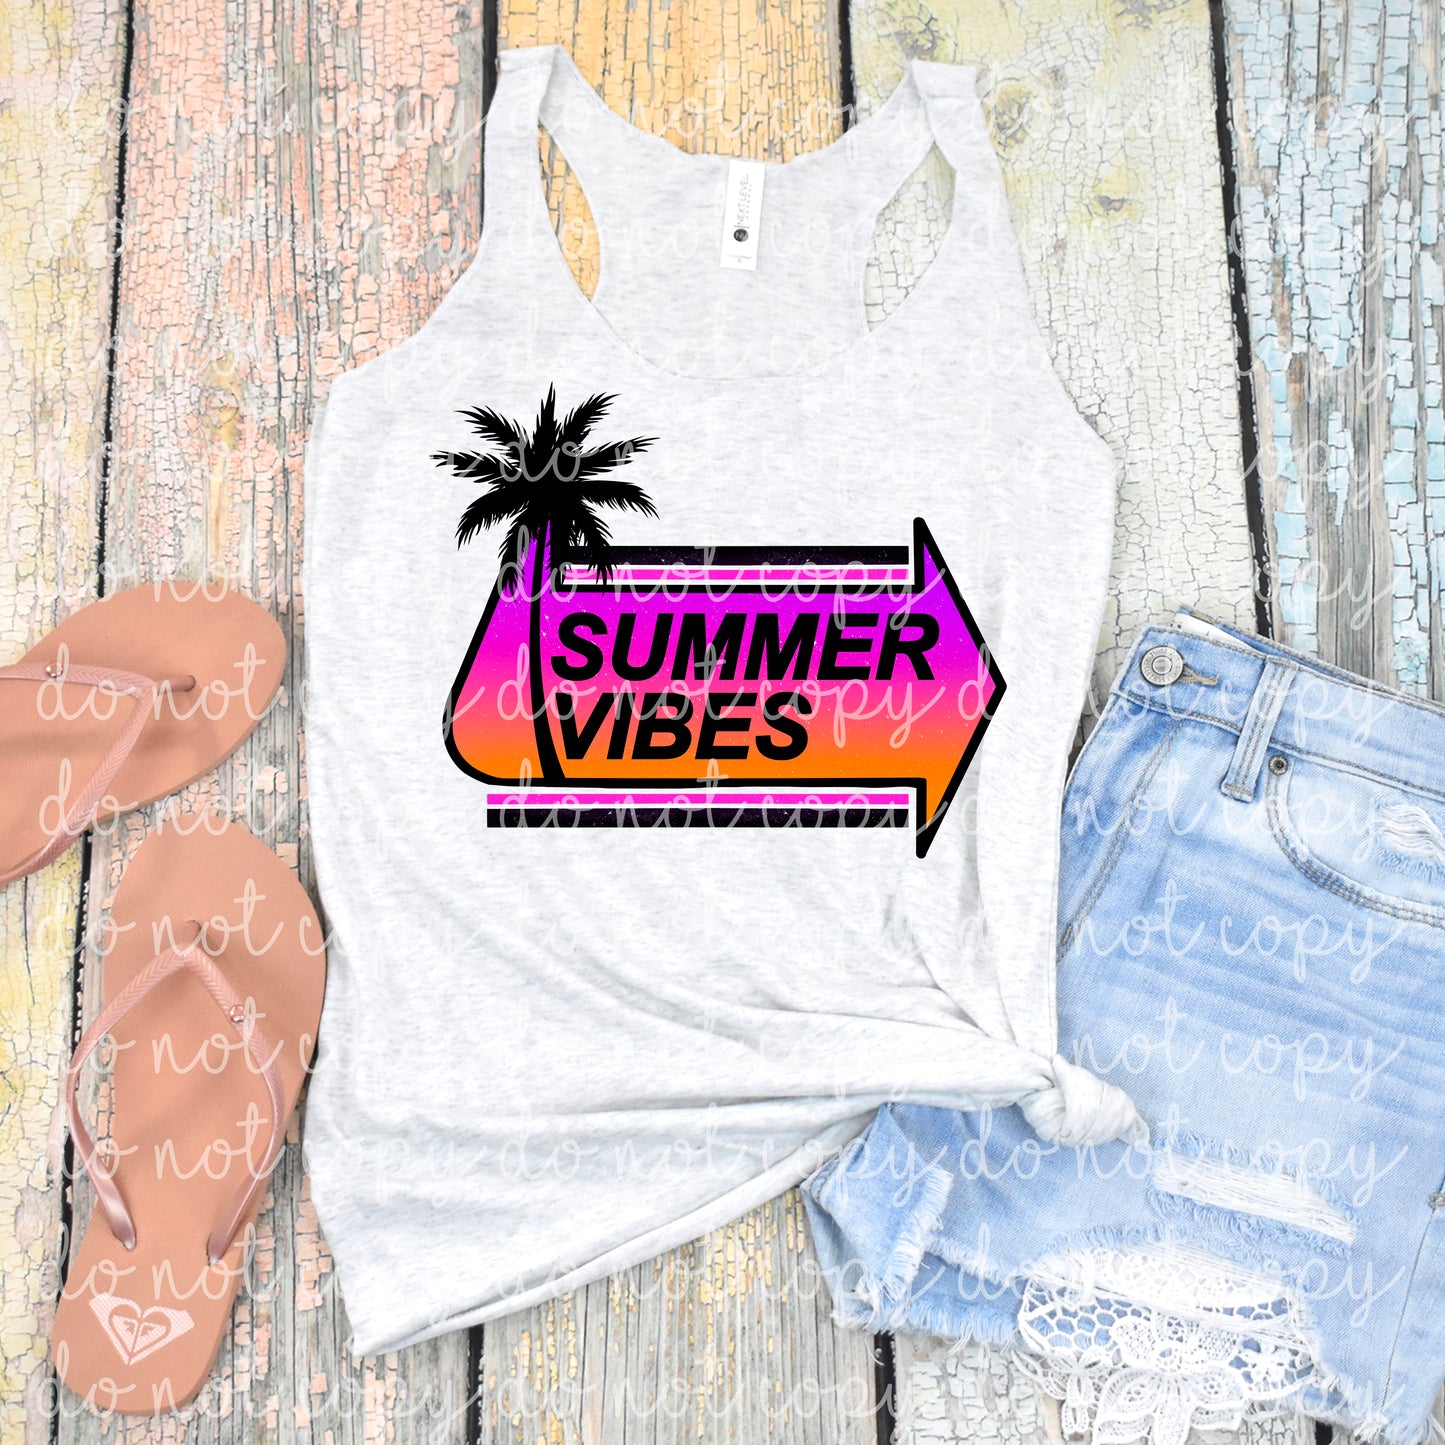 Summer vibes warped tour  Cerra's Shop Creates   